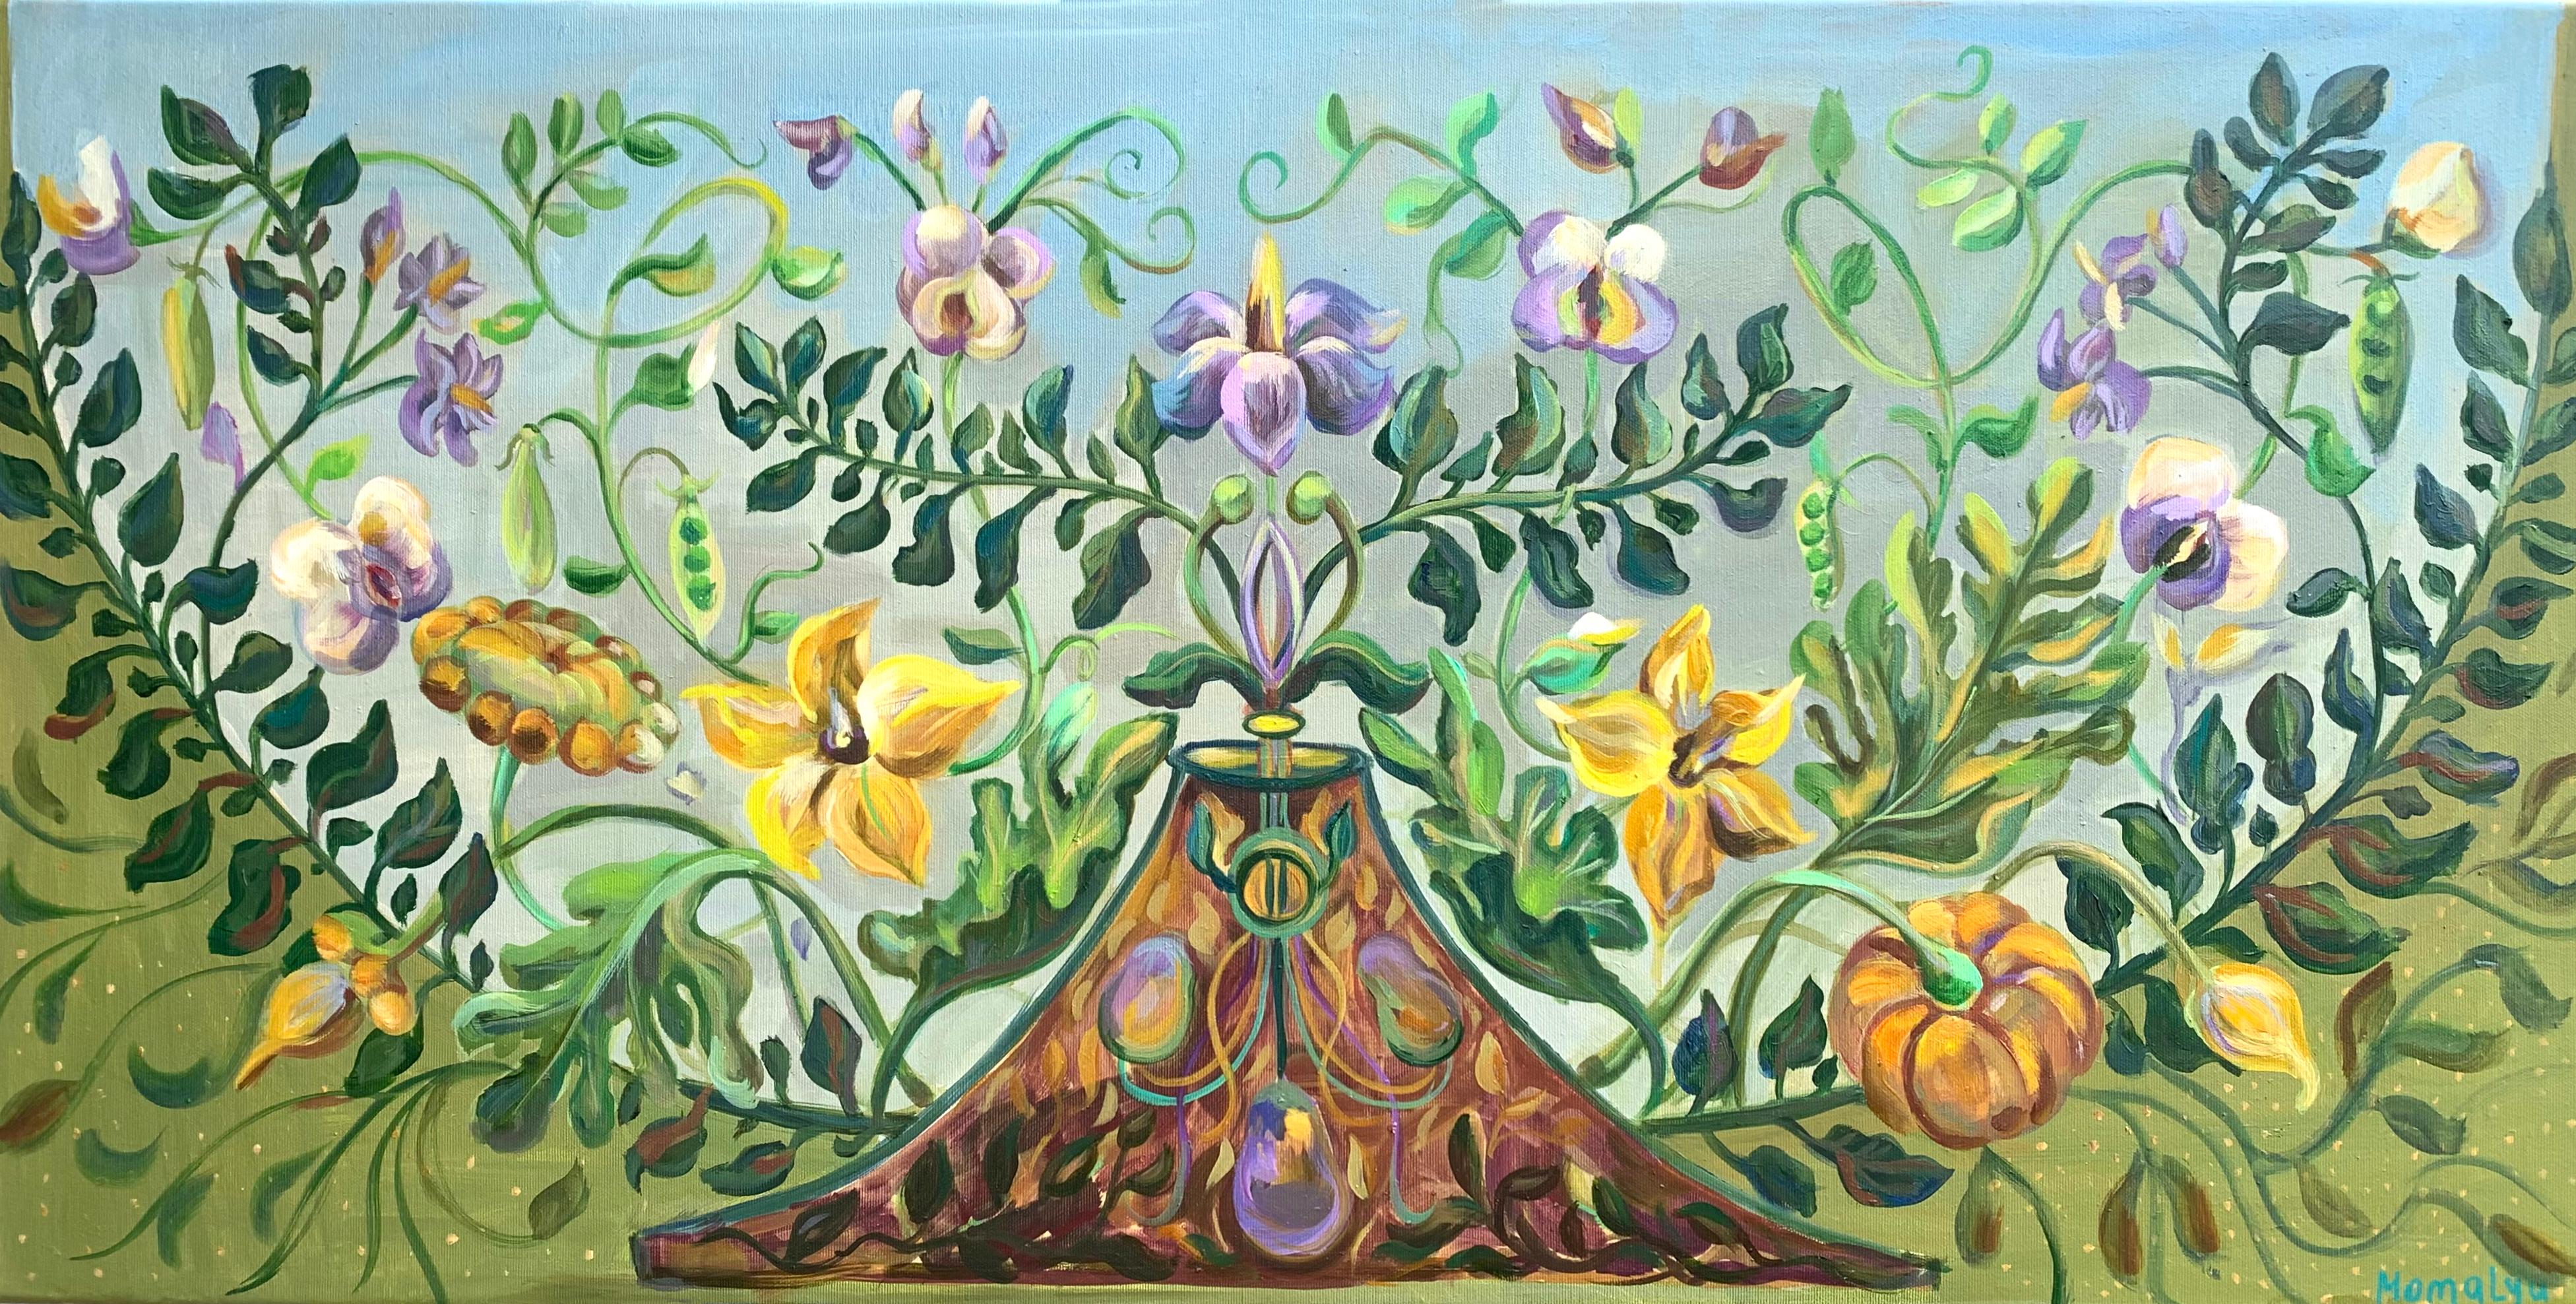 Momalyu Liubov Interior Print - Peaceful Kingdom of Plants. Botanical decorative oil painting